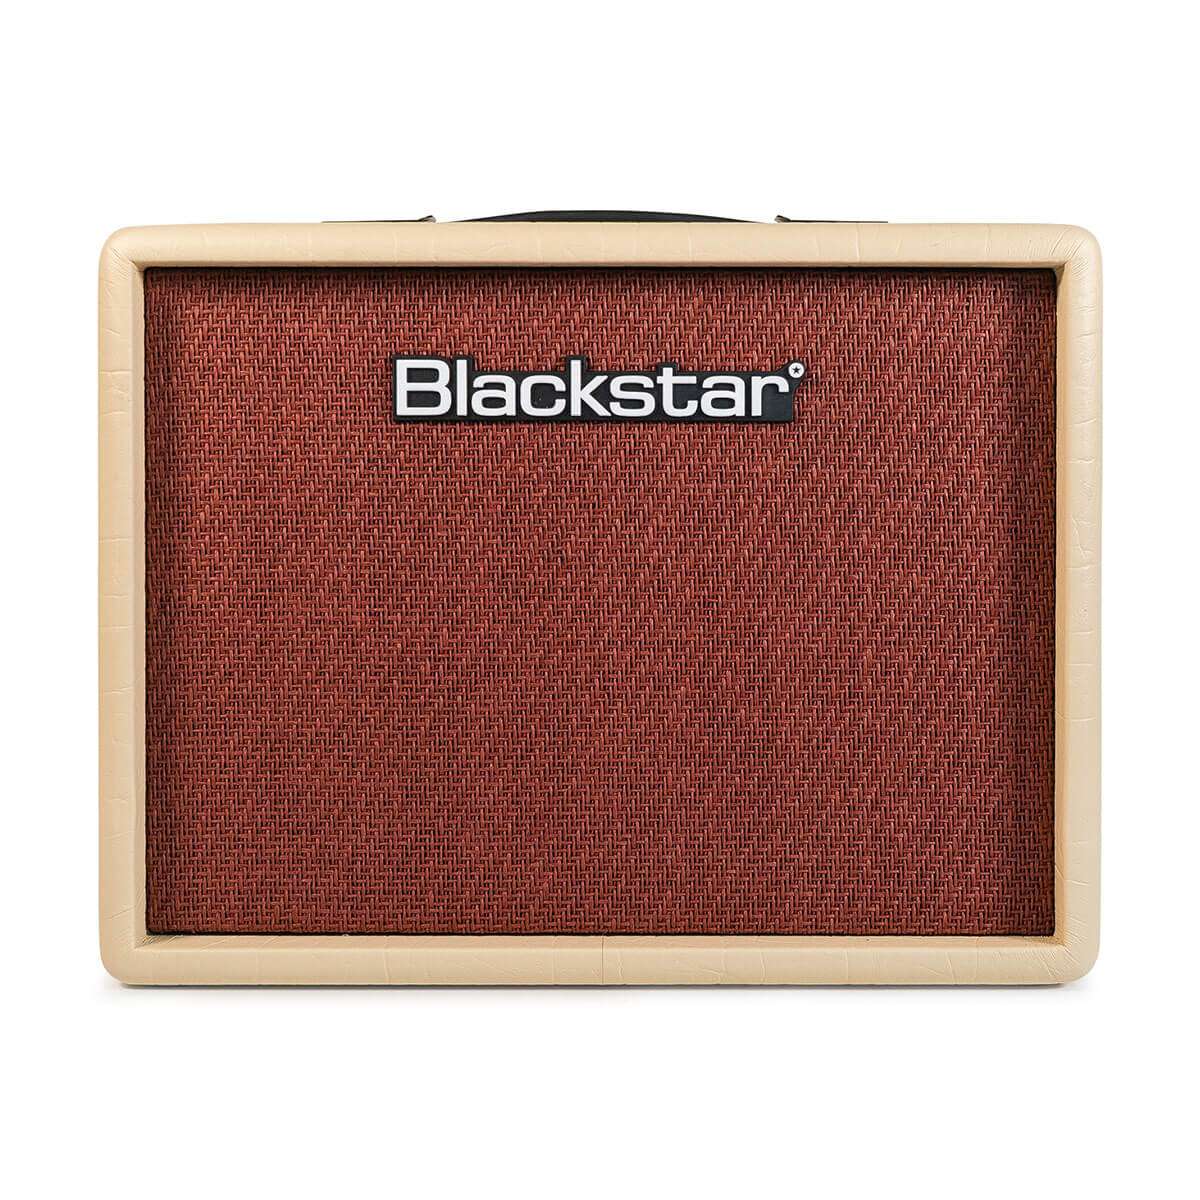 Blackstar Debut 15E guitar amp front